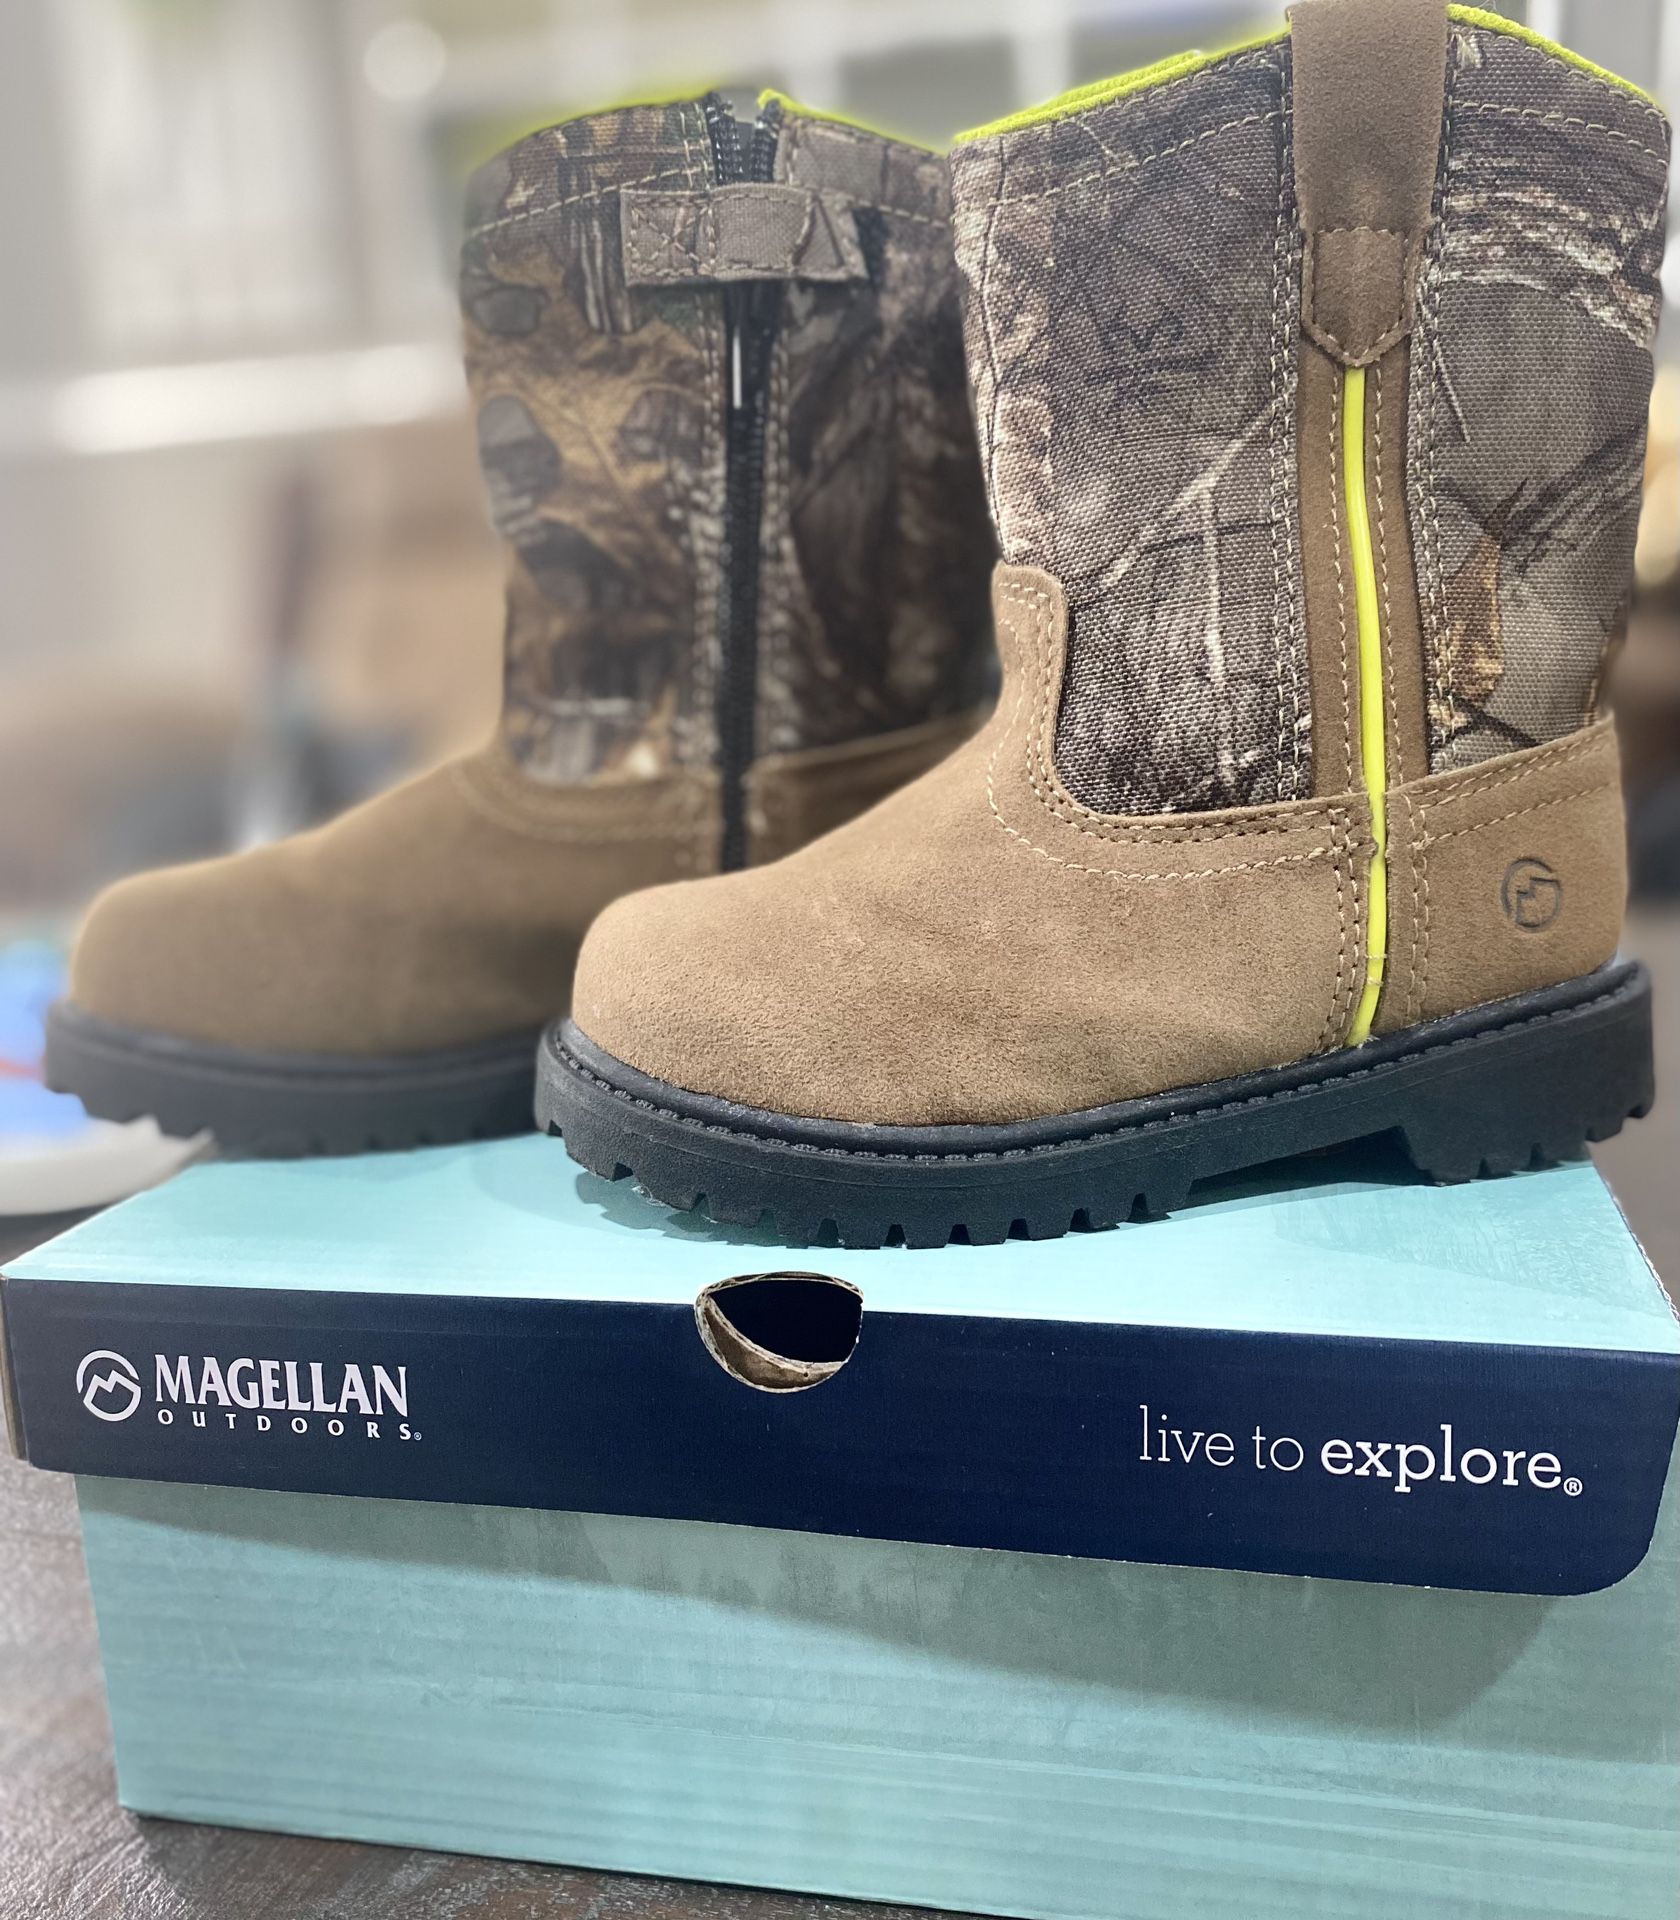 Magellan outdoor boots 